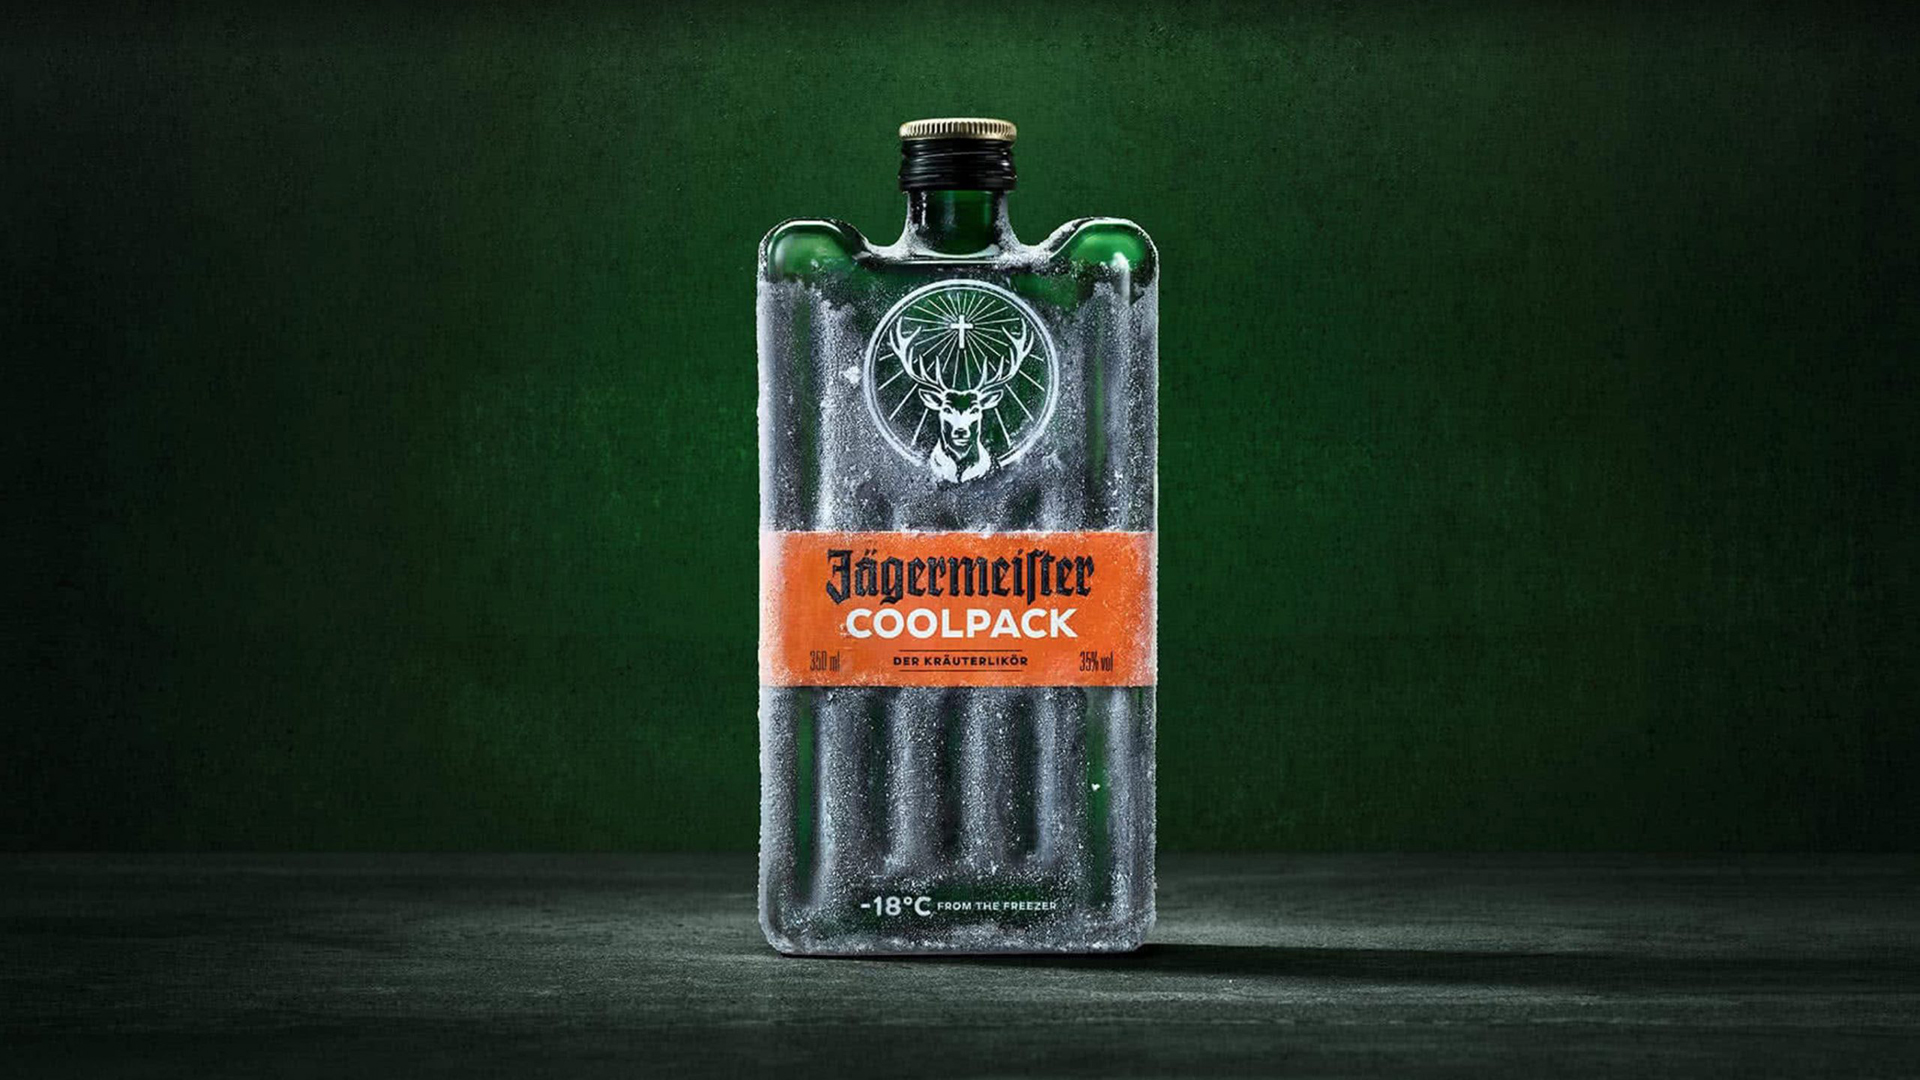 jagermeister_bottle-scaled-1